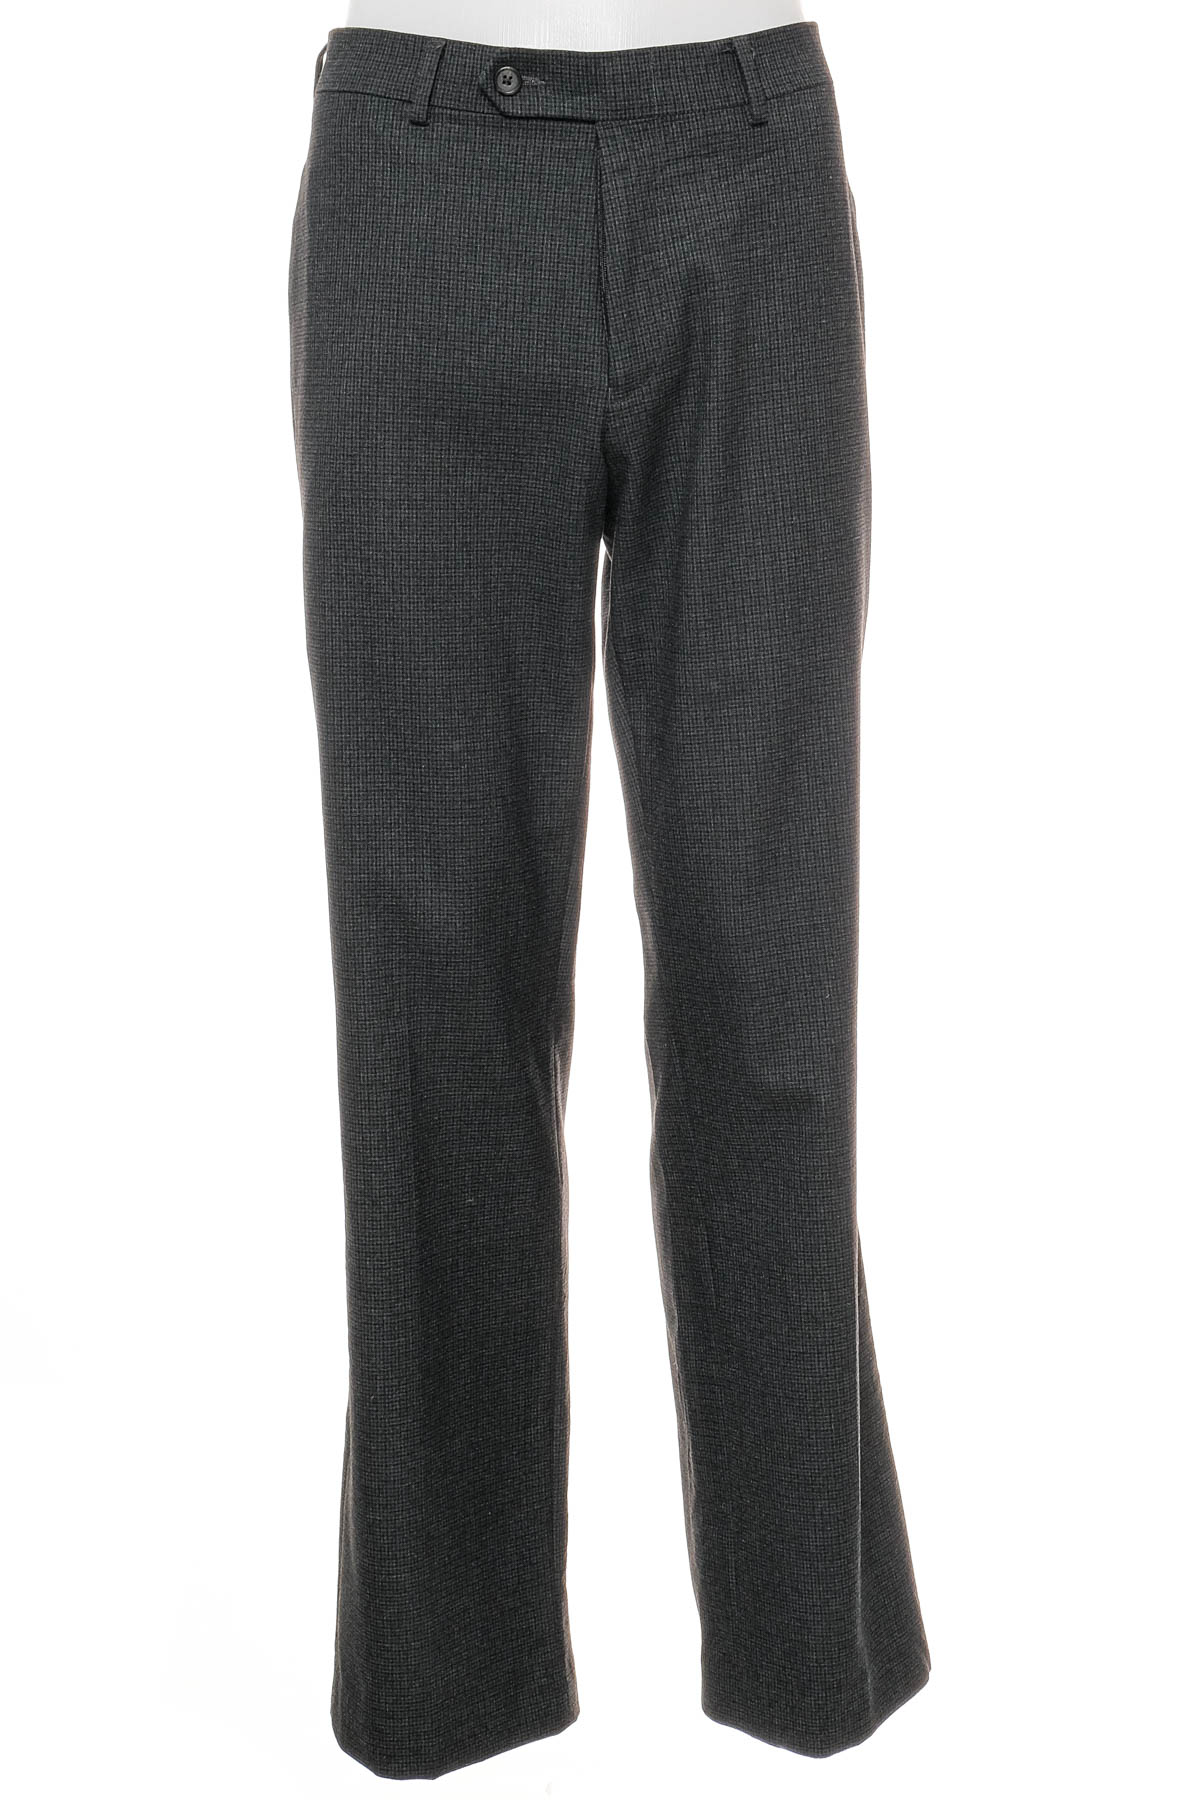 Pantalon pentru bărbați - Ralph Lauren - 0